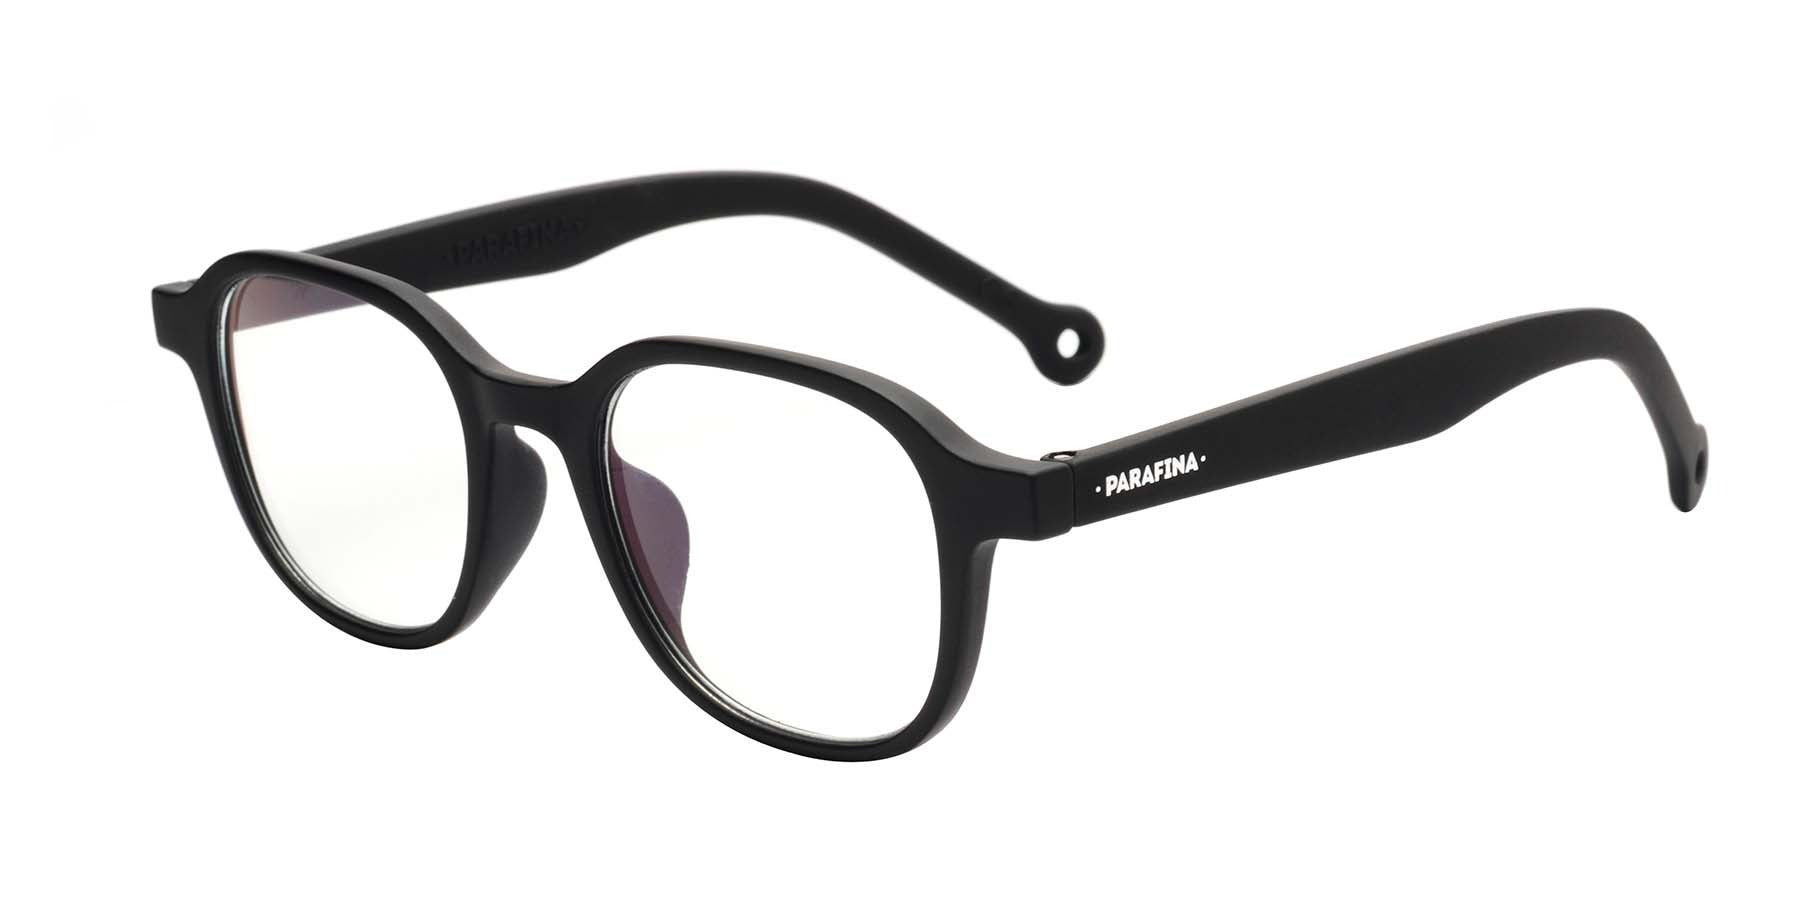 Parafina Screen/Reading Glasses - Duero